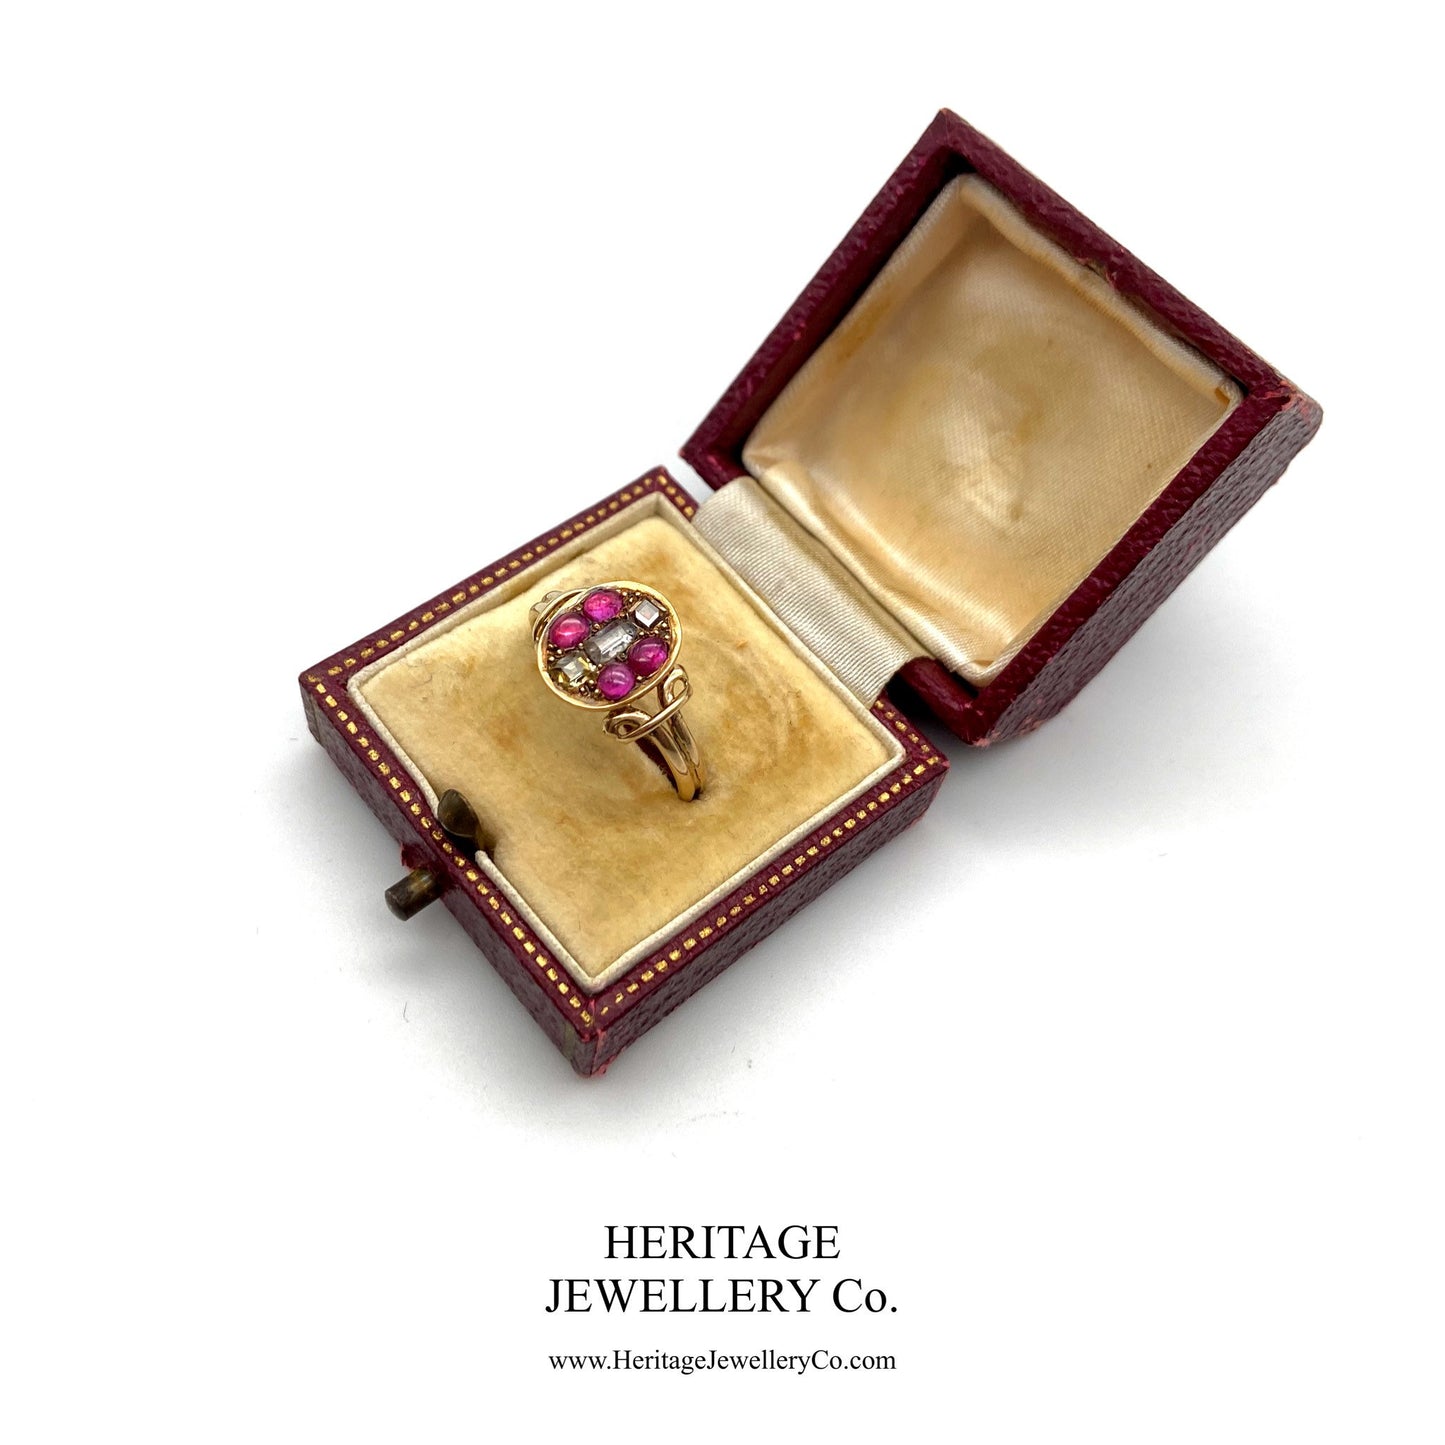 Georgian Ruby & Diamond Ring (c. 1714-1830)